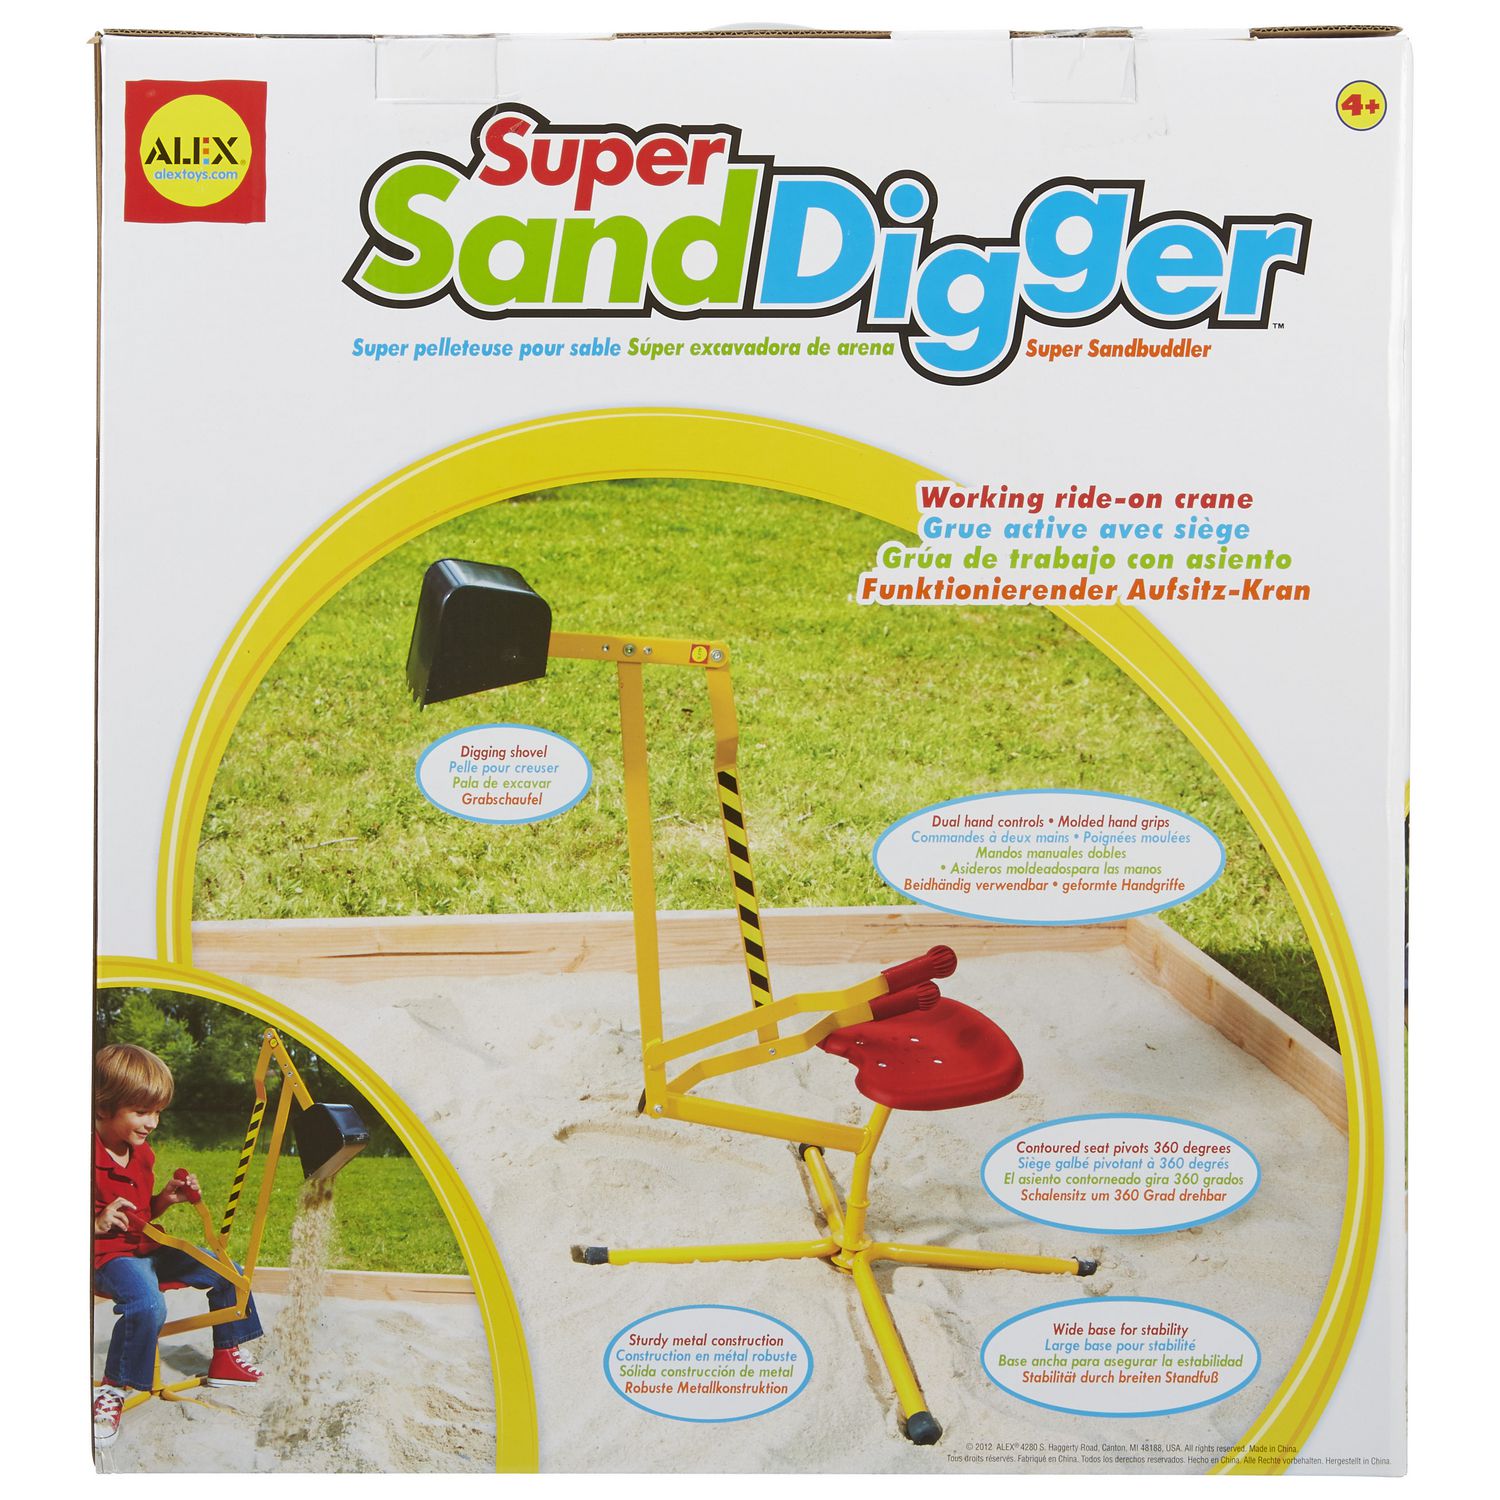 alex sand digger